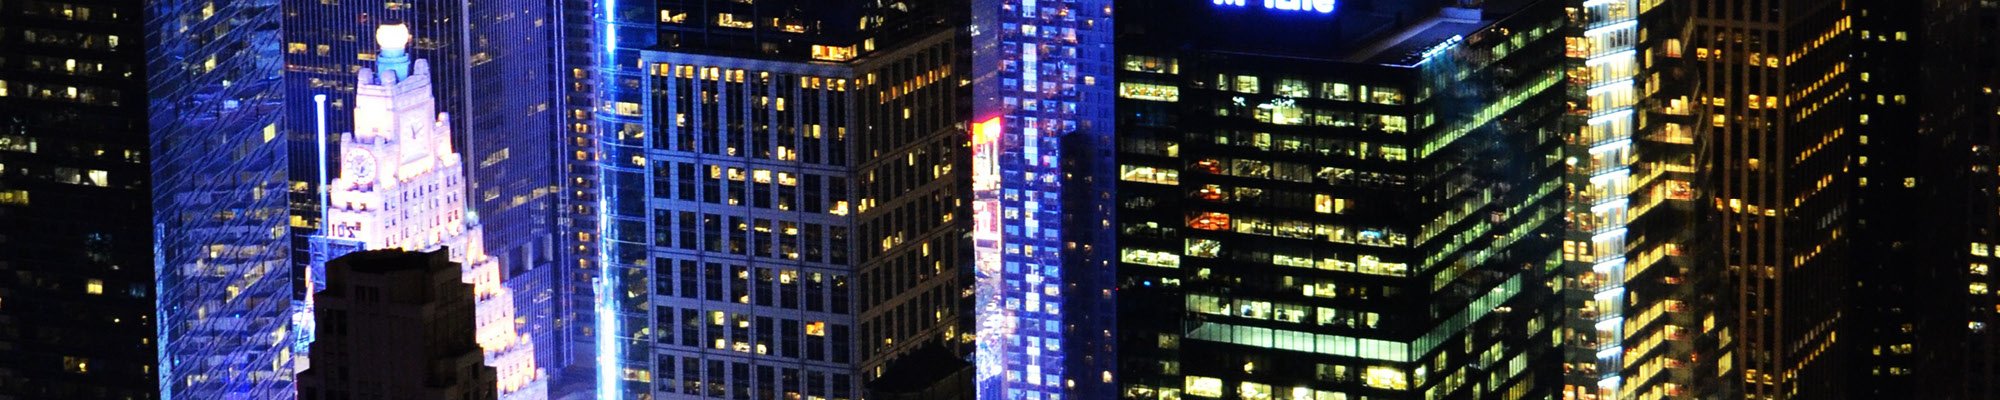 New York buildings at night